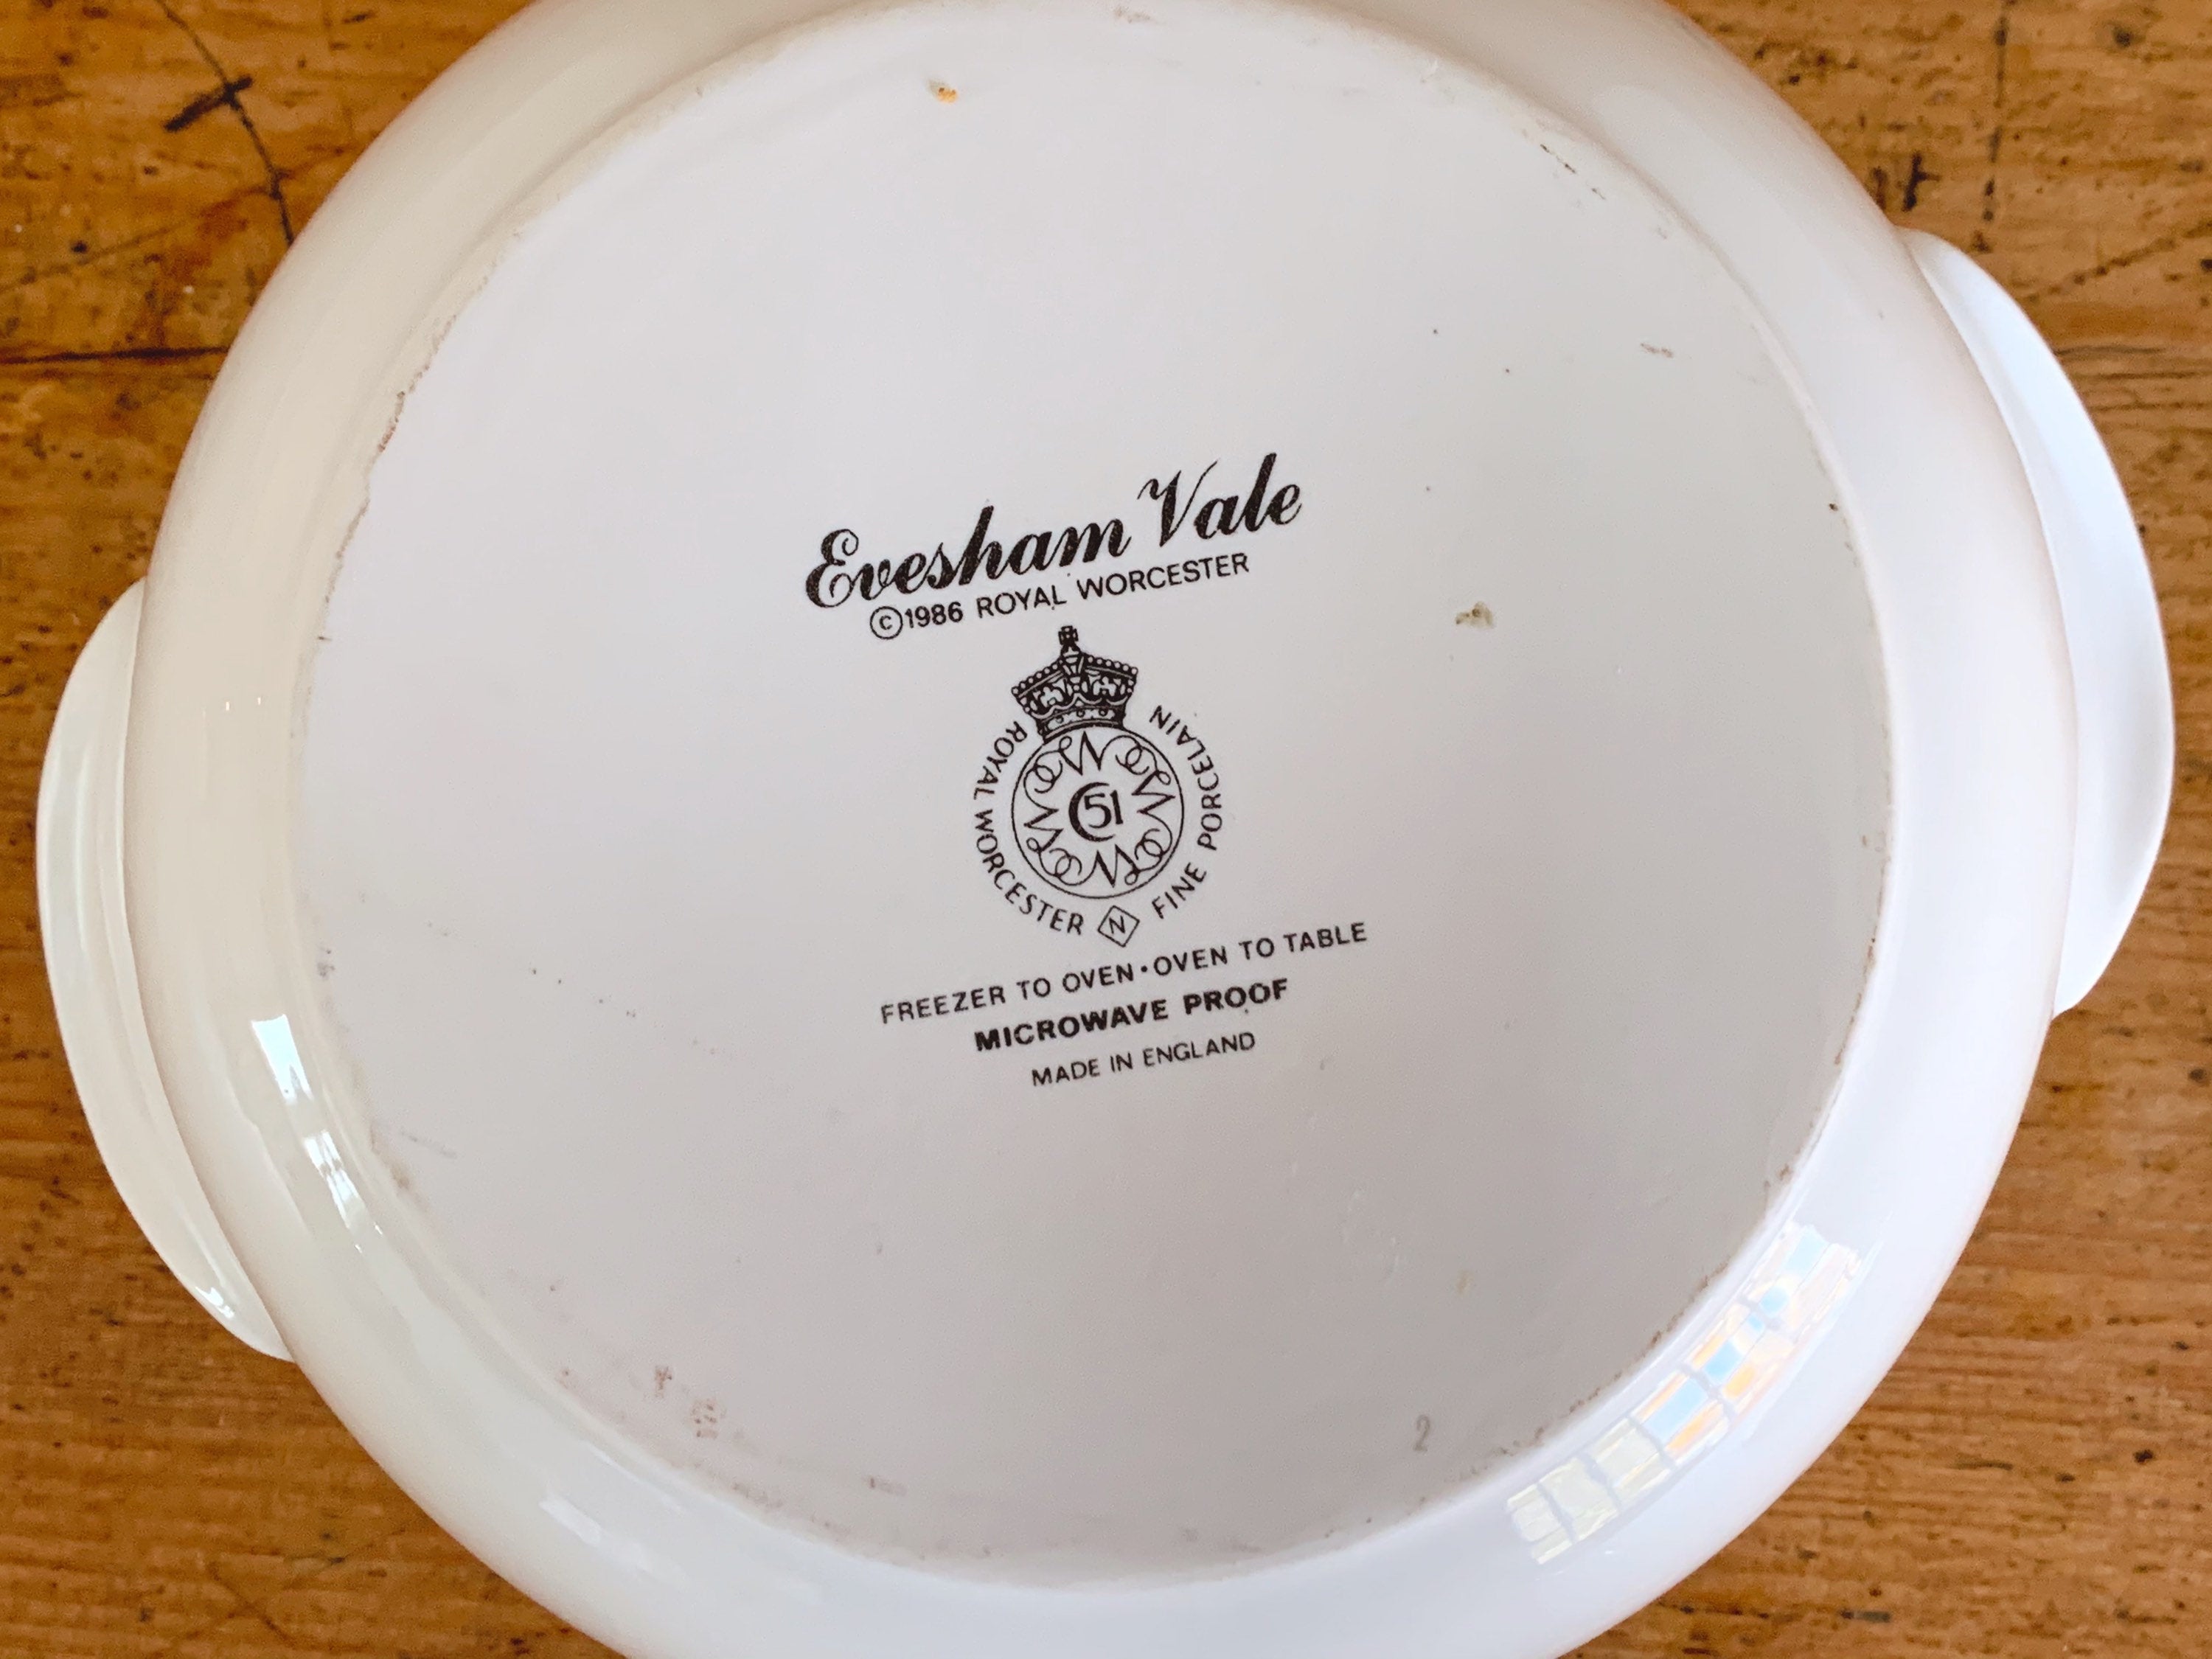 Vintage 1986 Royal Worcester Evesham Vale Porcelain Serving Dish with Lid | Oven To Table 1 Quart Casserole Tureen